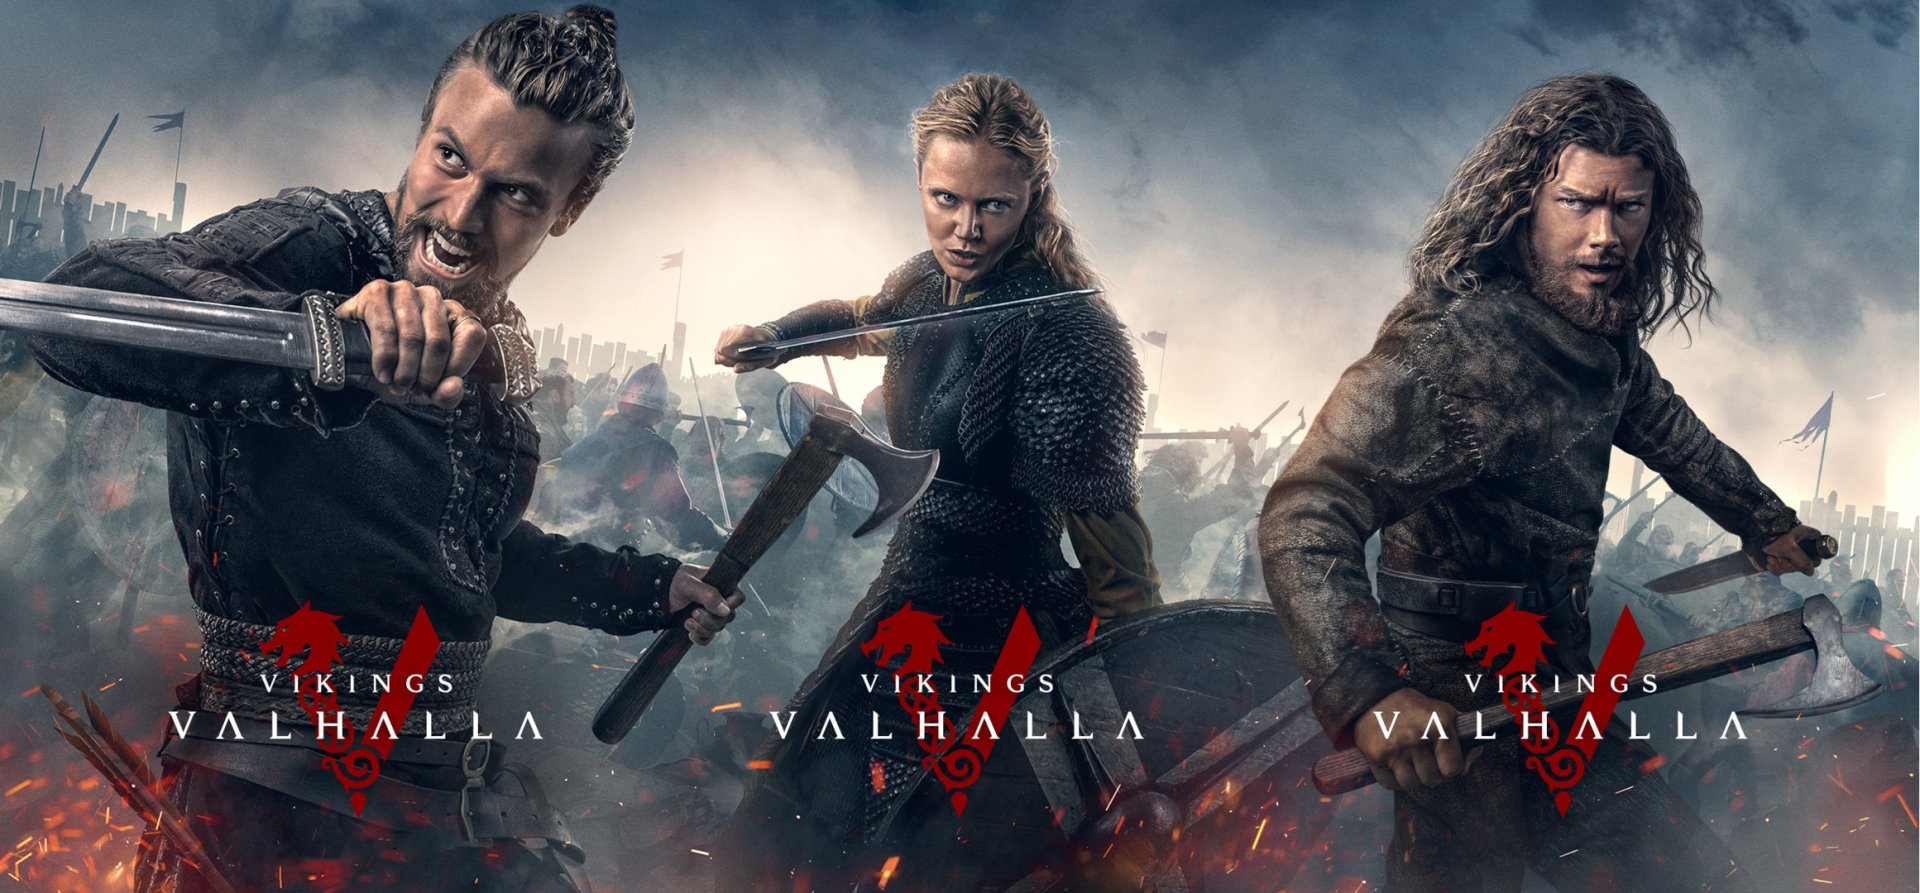 24+] Vikings Valhalla Wallpapers - WallpaperSafari